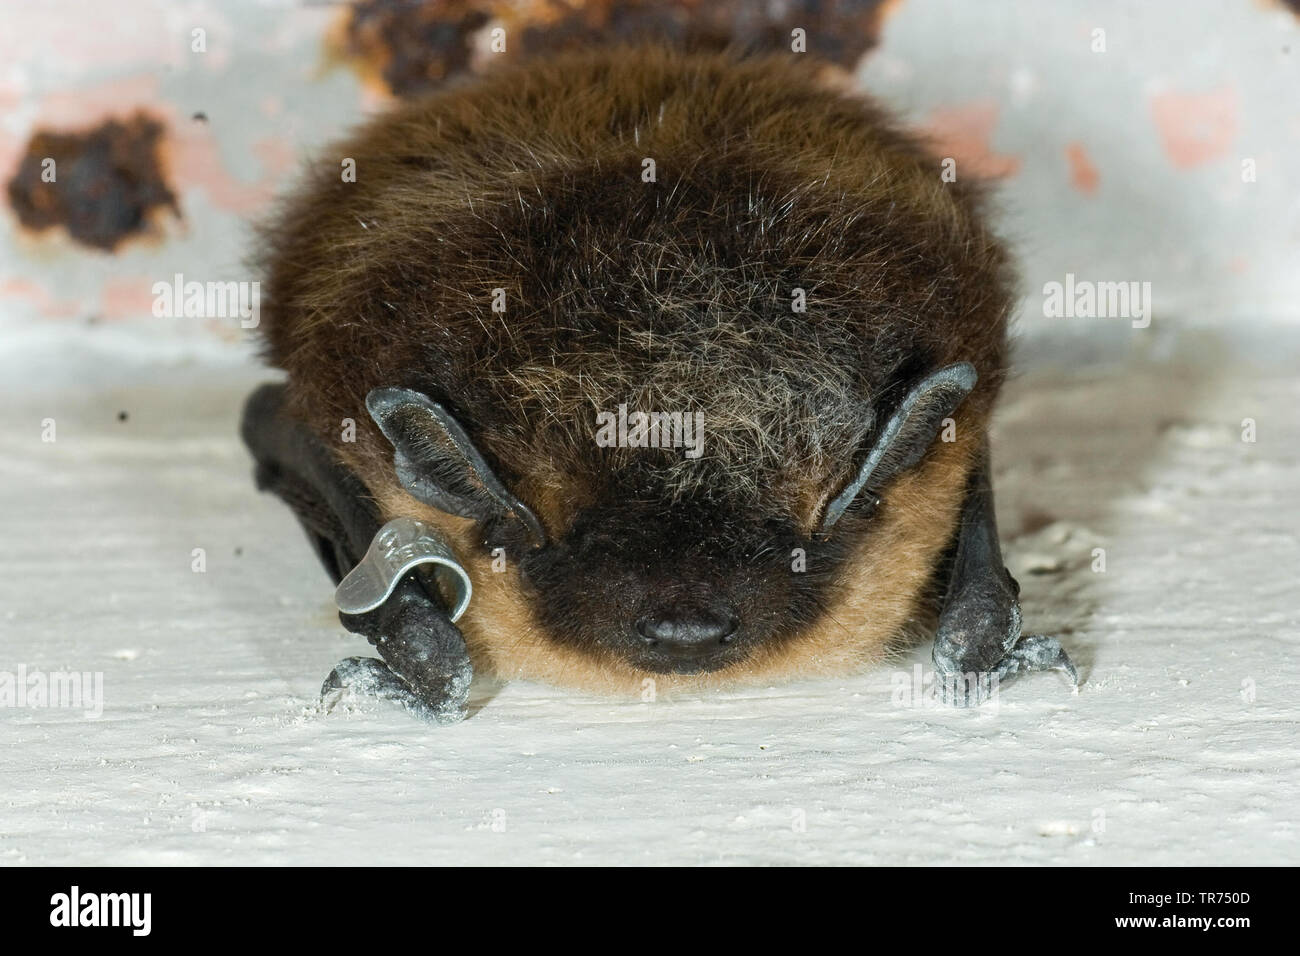 Northern bat (Eptesicus nilssonii, Eptesicus nilssoni), hanging on a wall, Poland Stock Photo